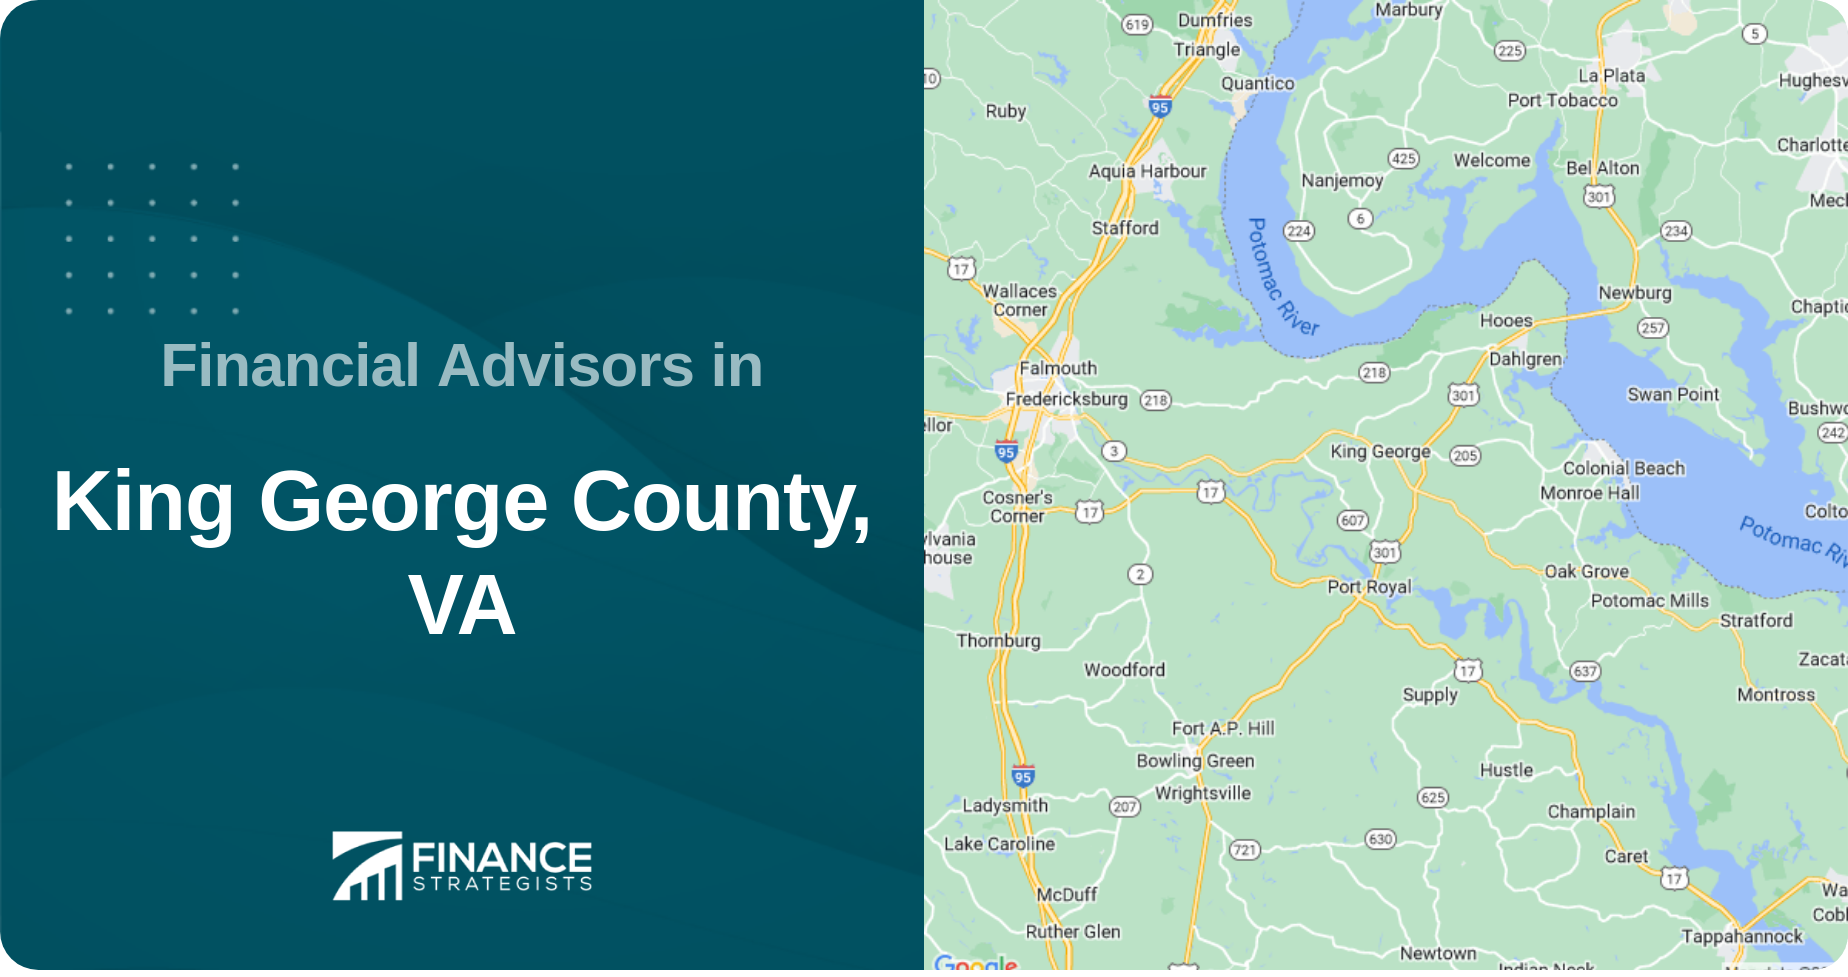 Financial Advisors in King George County, VA